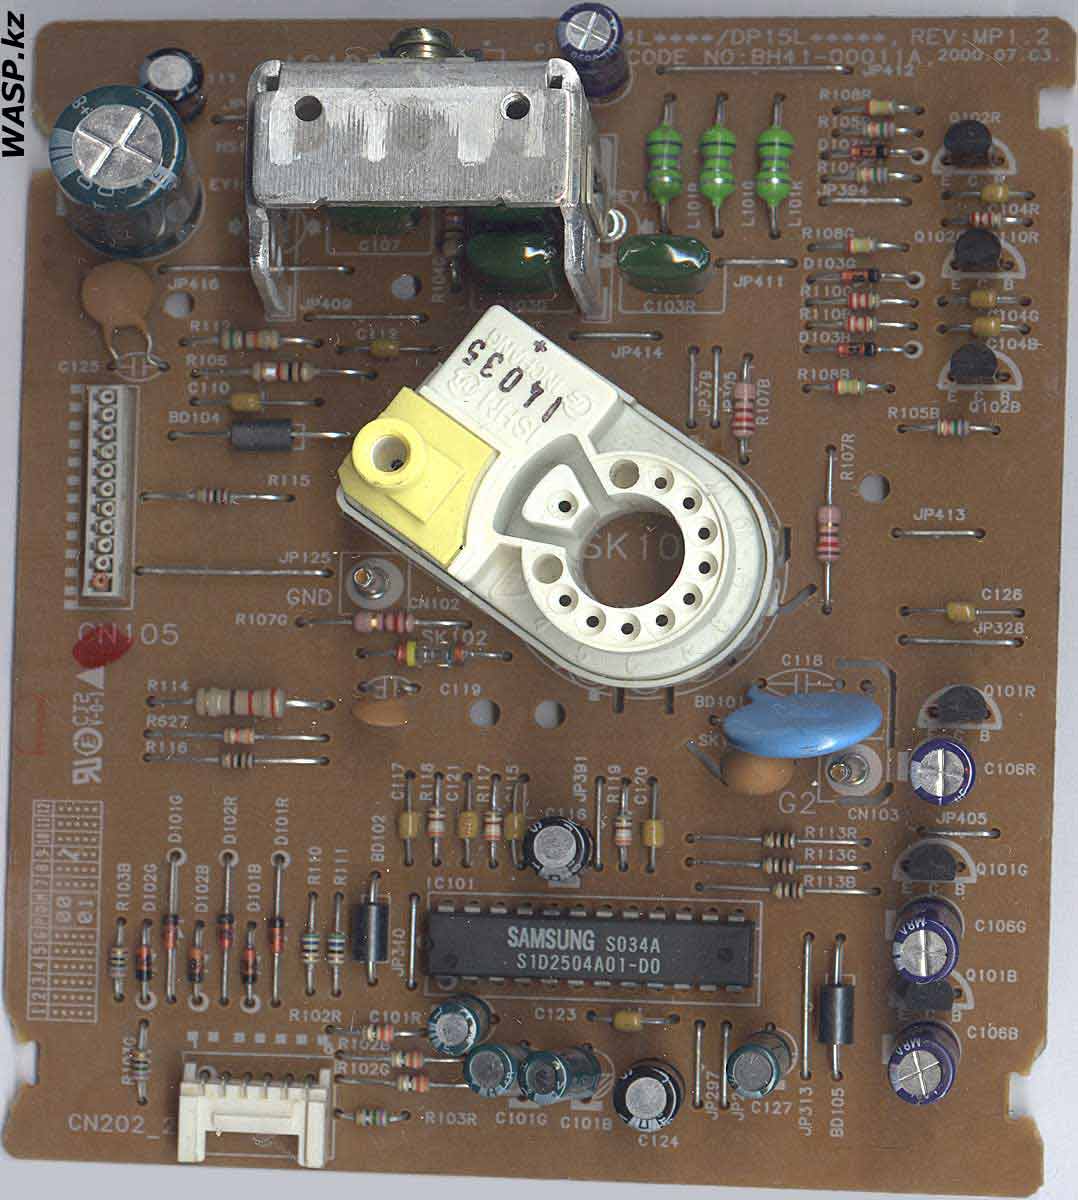 SAMSUNG S1D2504A01-D0 микросхема в SyncMaster 450b